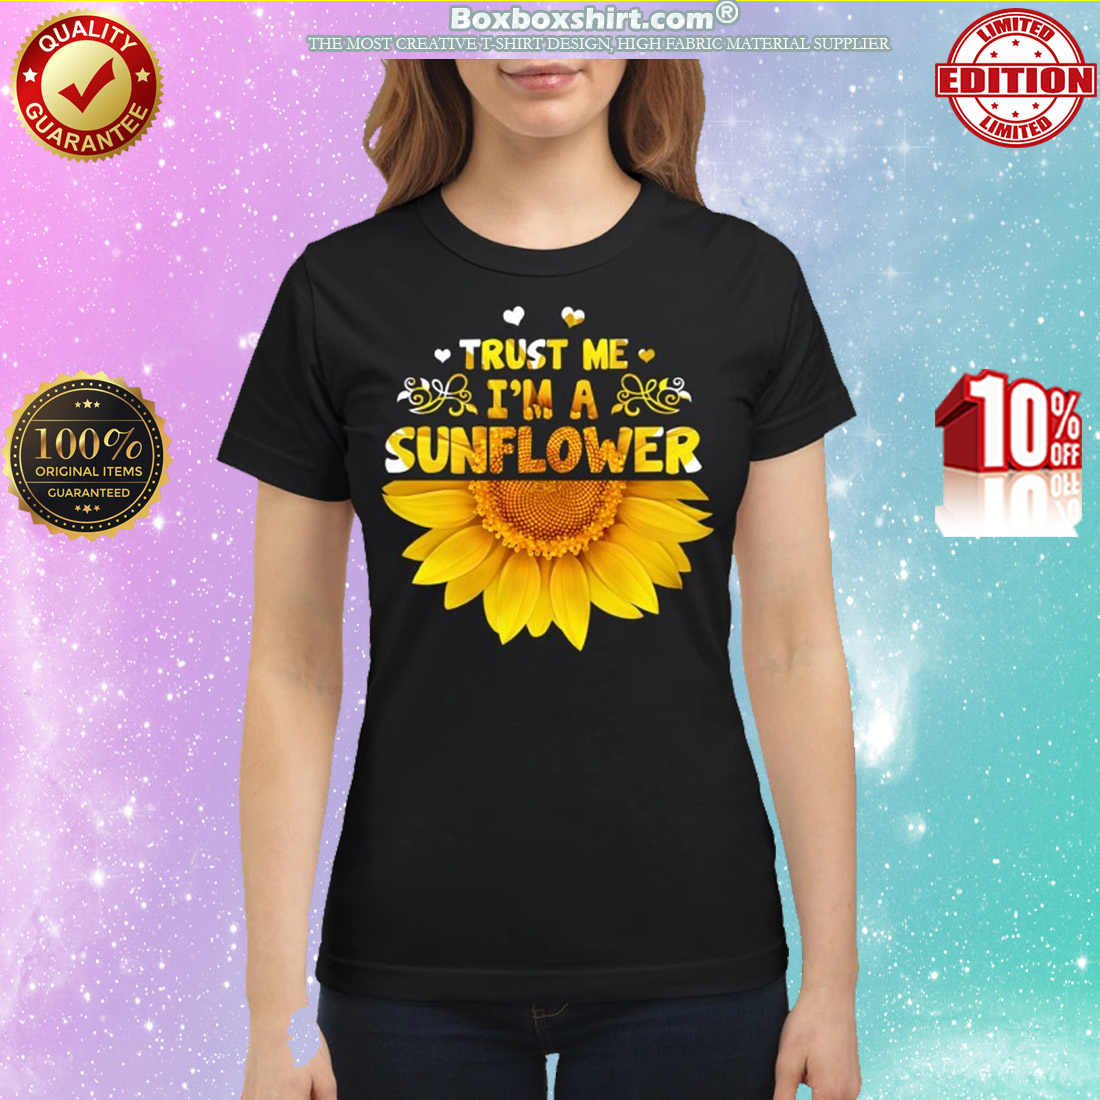 Trust me I'm a sunflower classic shirt